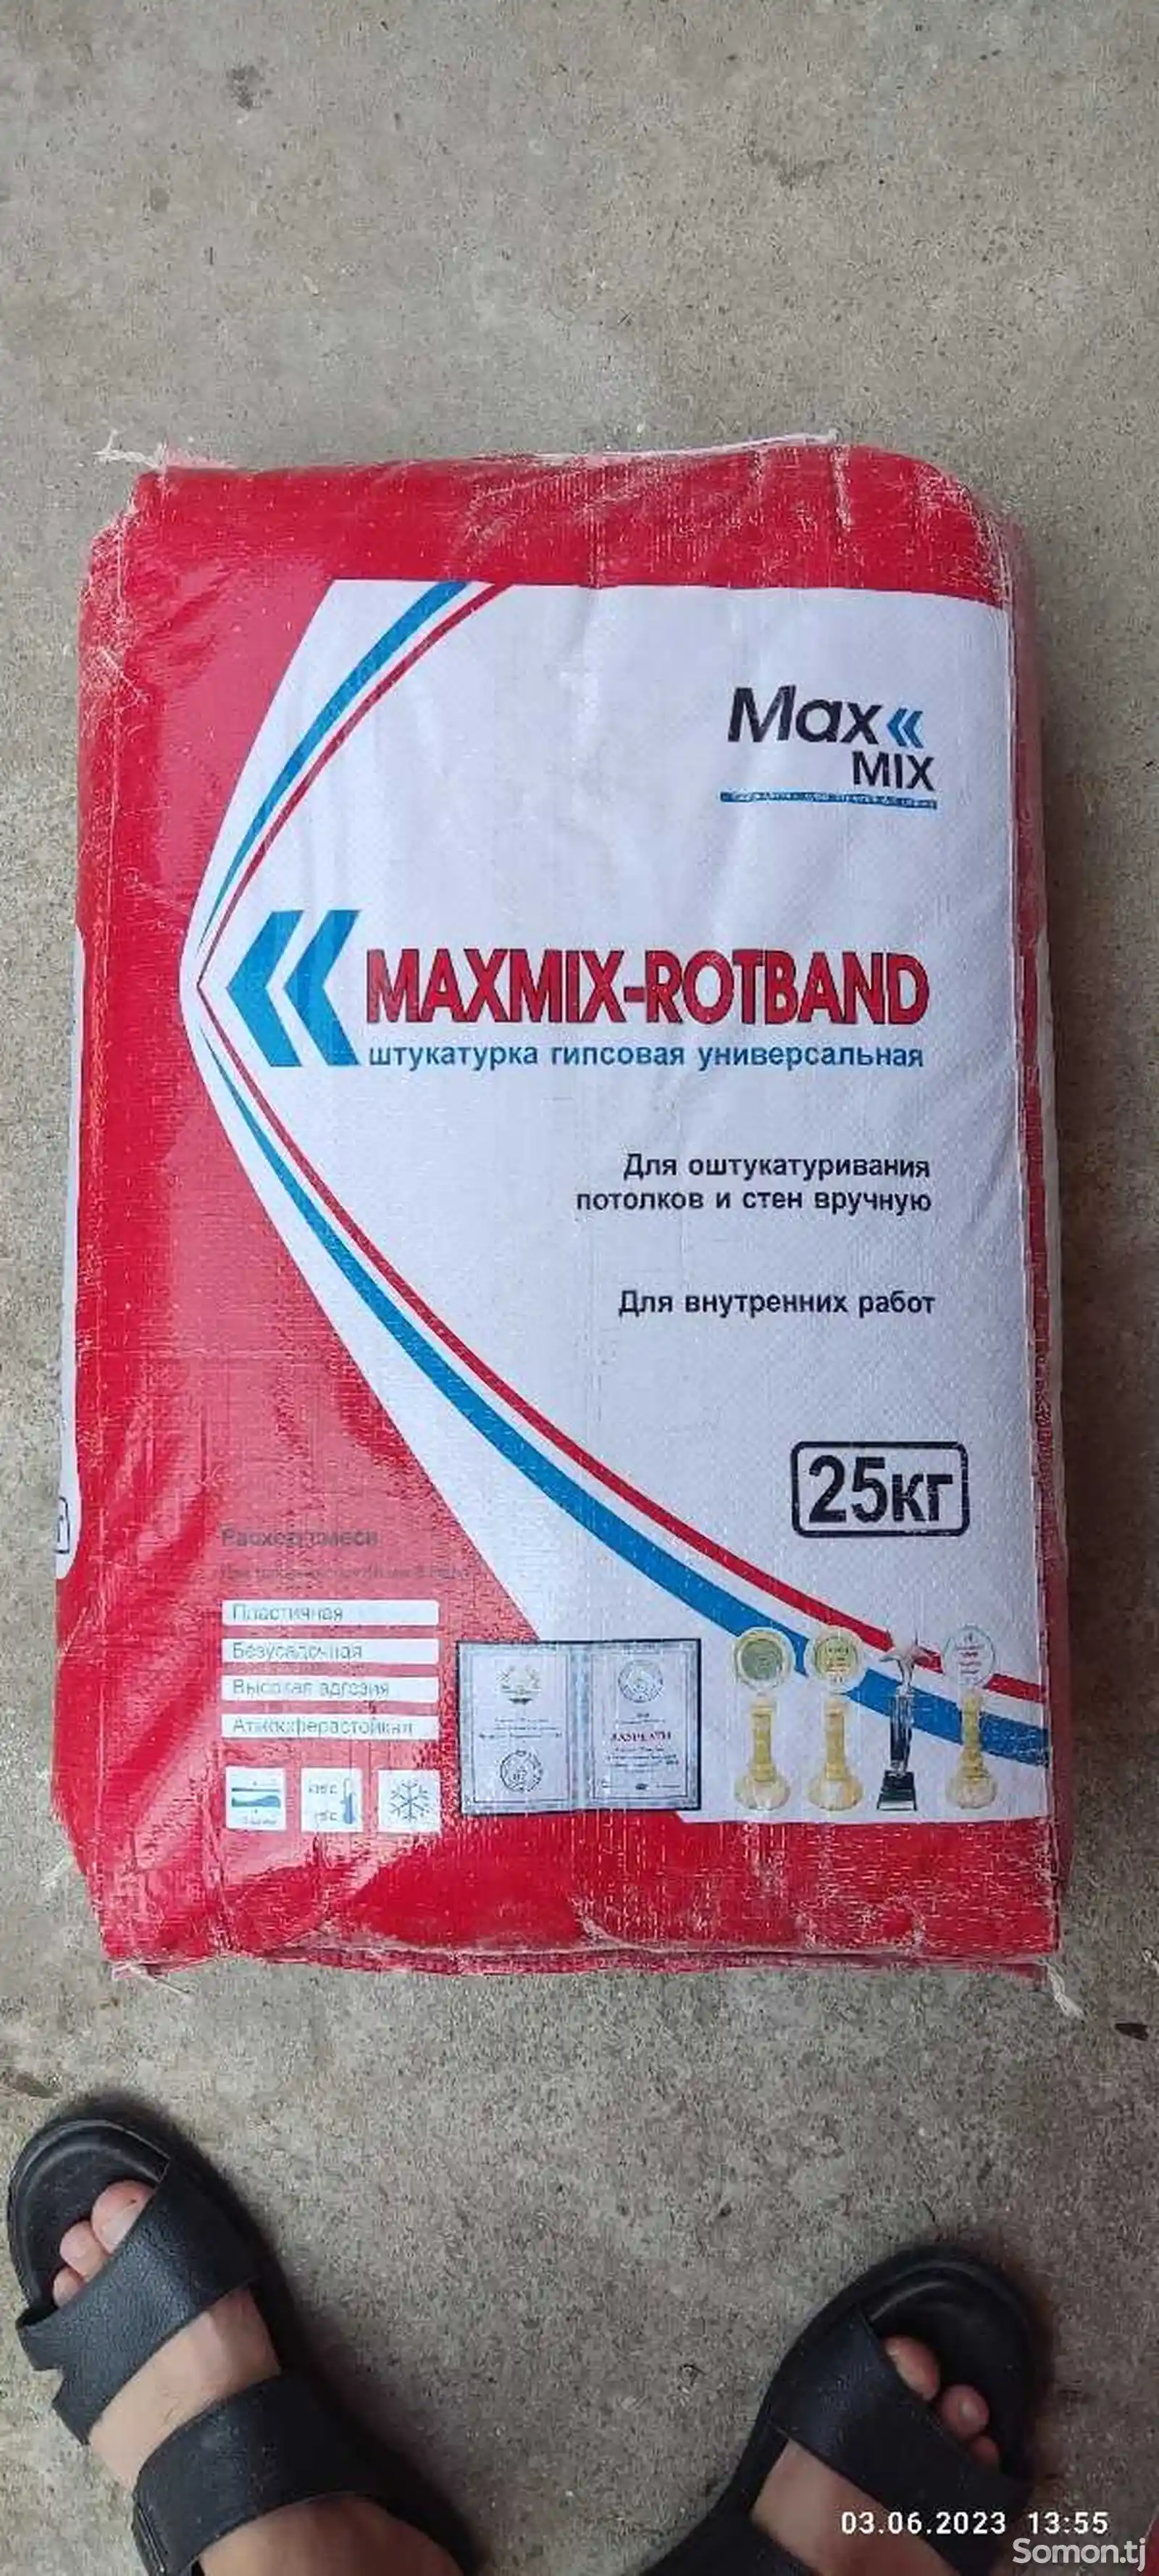 Ротбанд Мaxmix-3